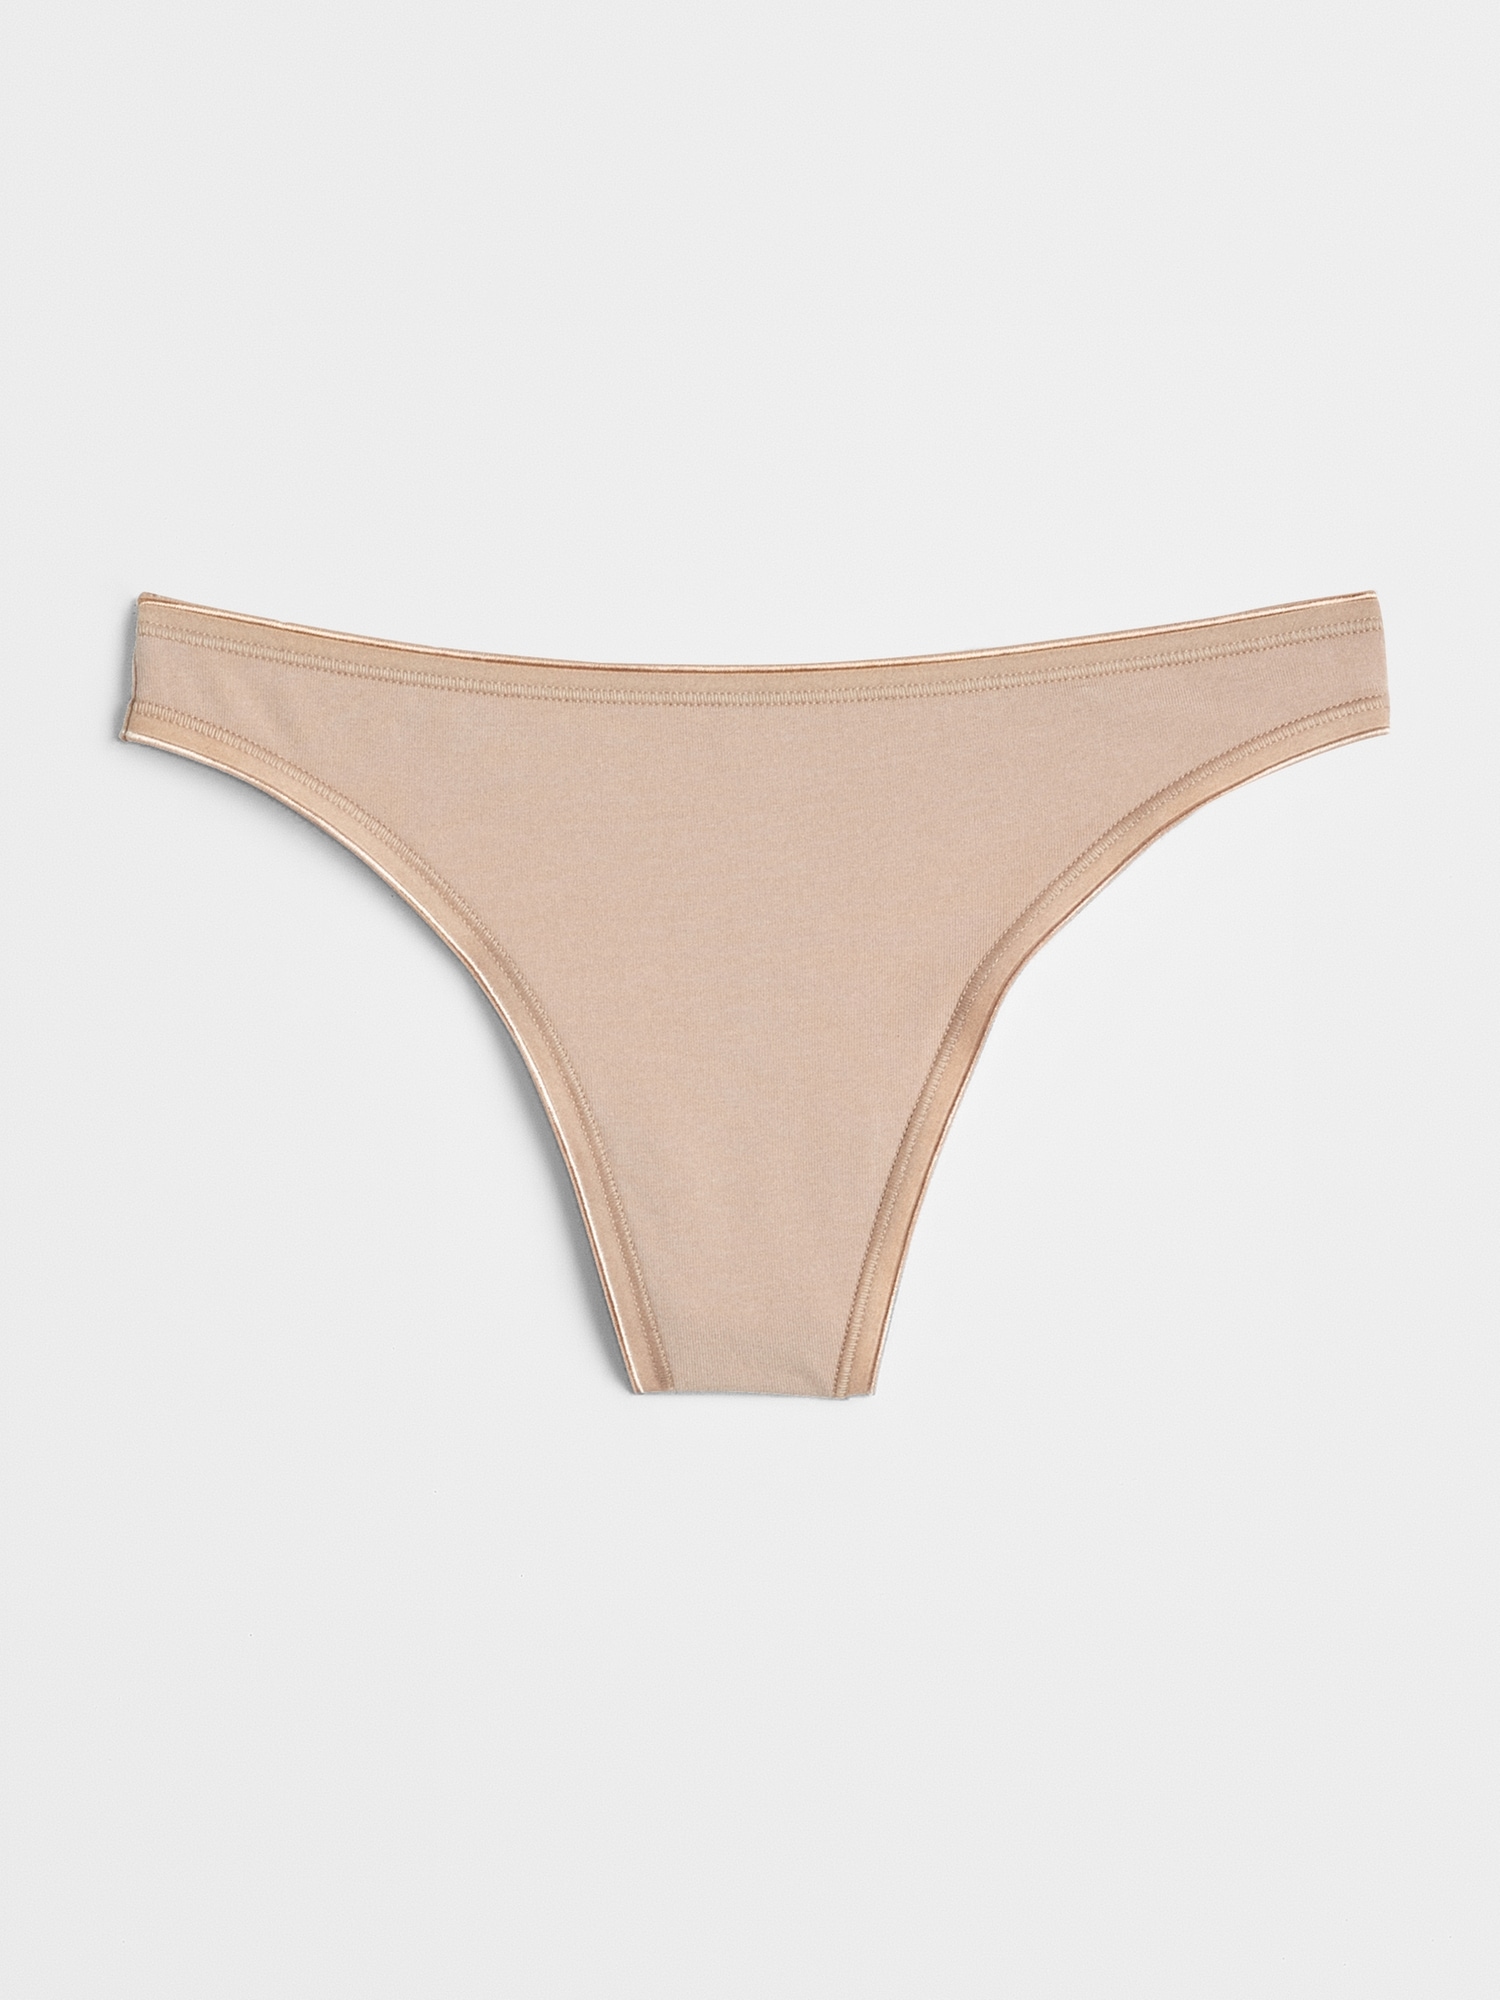 New LOVE by Gap Lilac Cotton Underwear